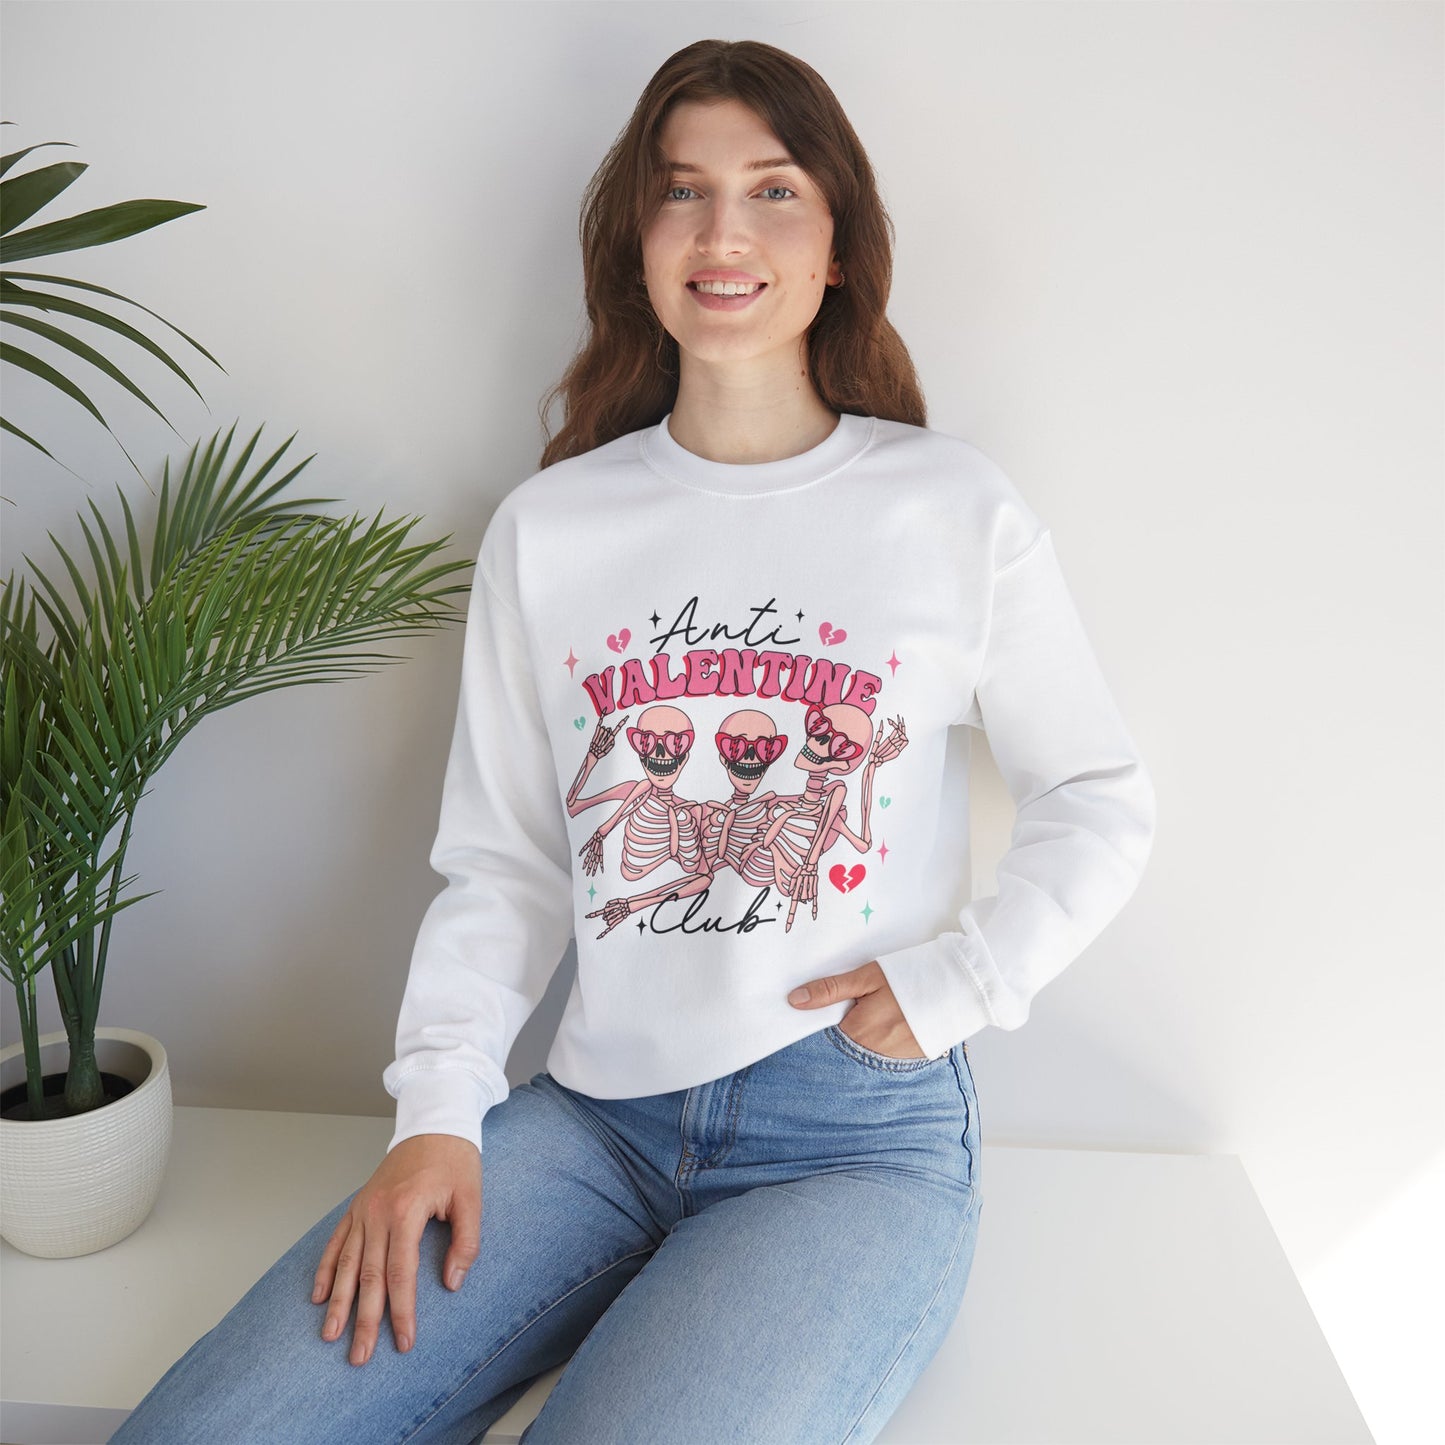 Anti-Valentine's Club Sweatshirt